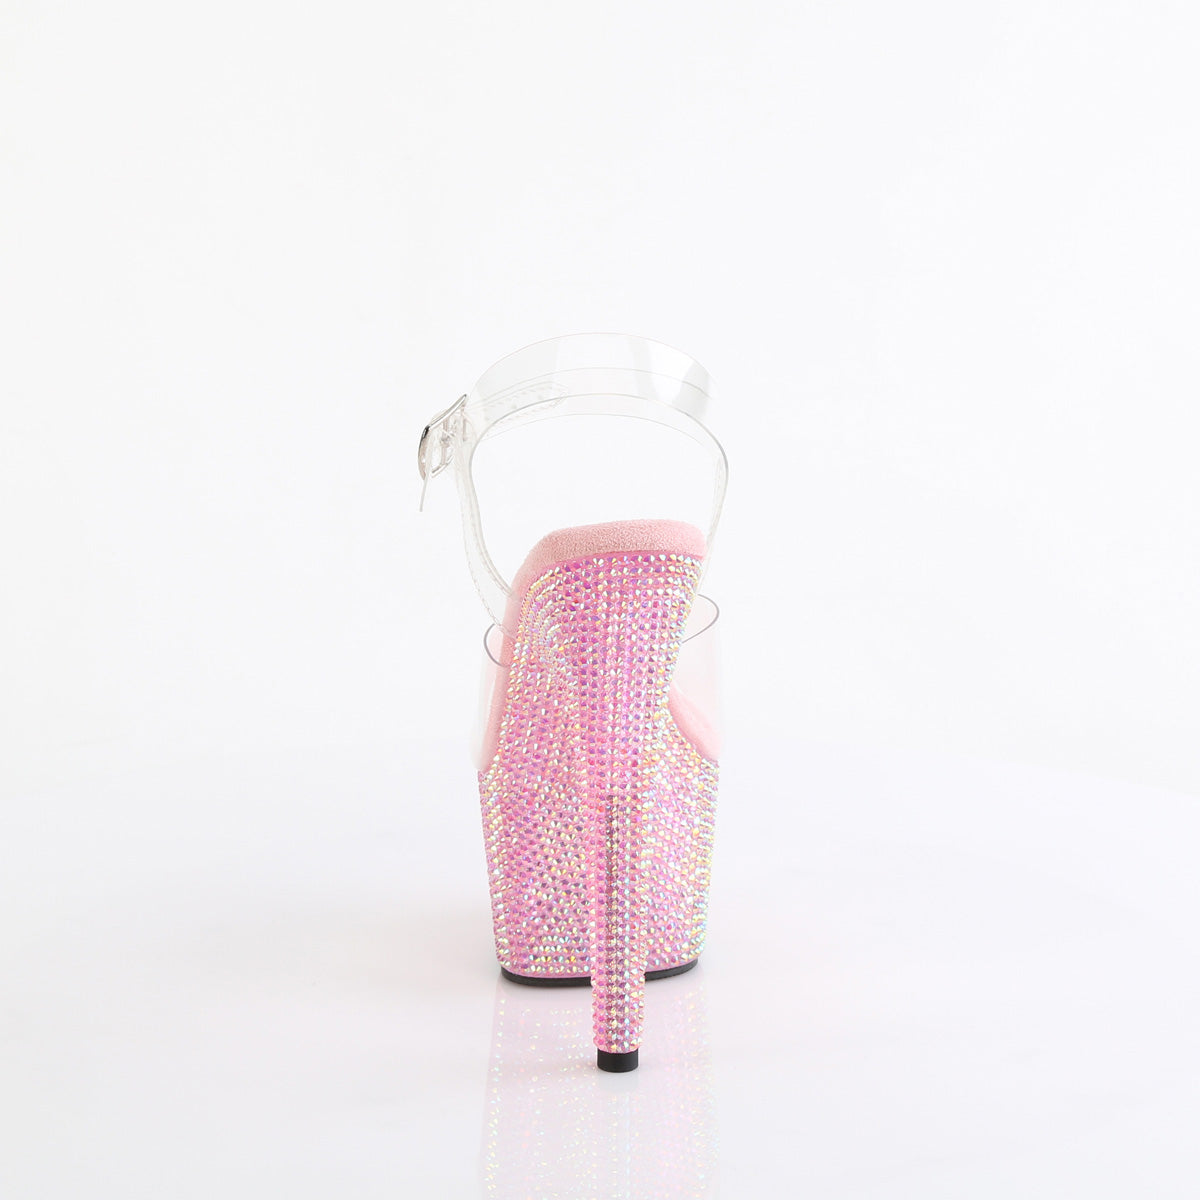 BEJEWELED-708RRS Pleaser Clear/B Pink Rhinestones Platform Shoes [Exotic Dance Shoes]